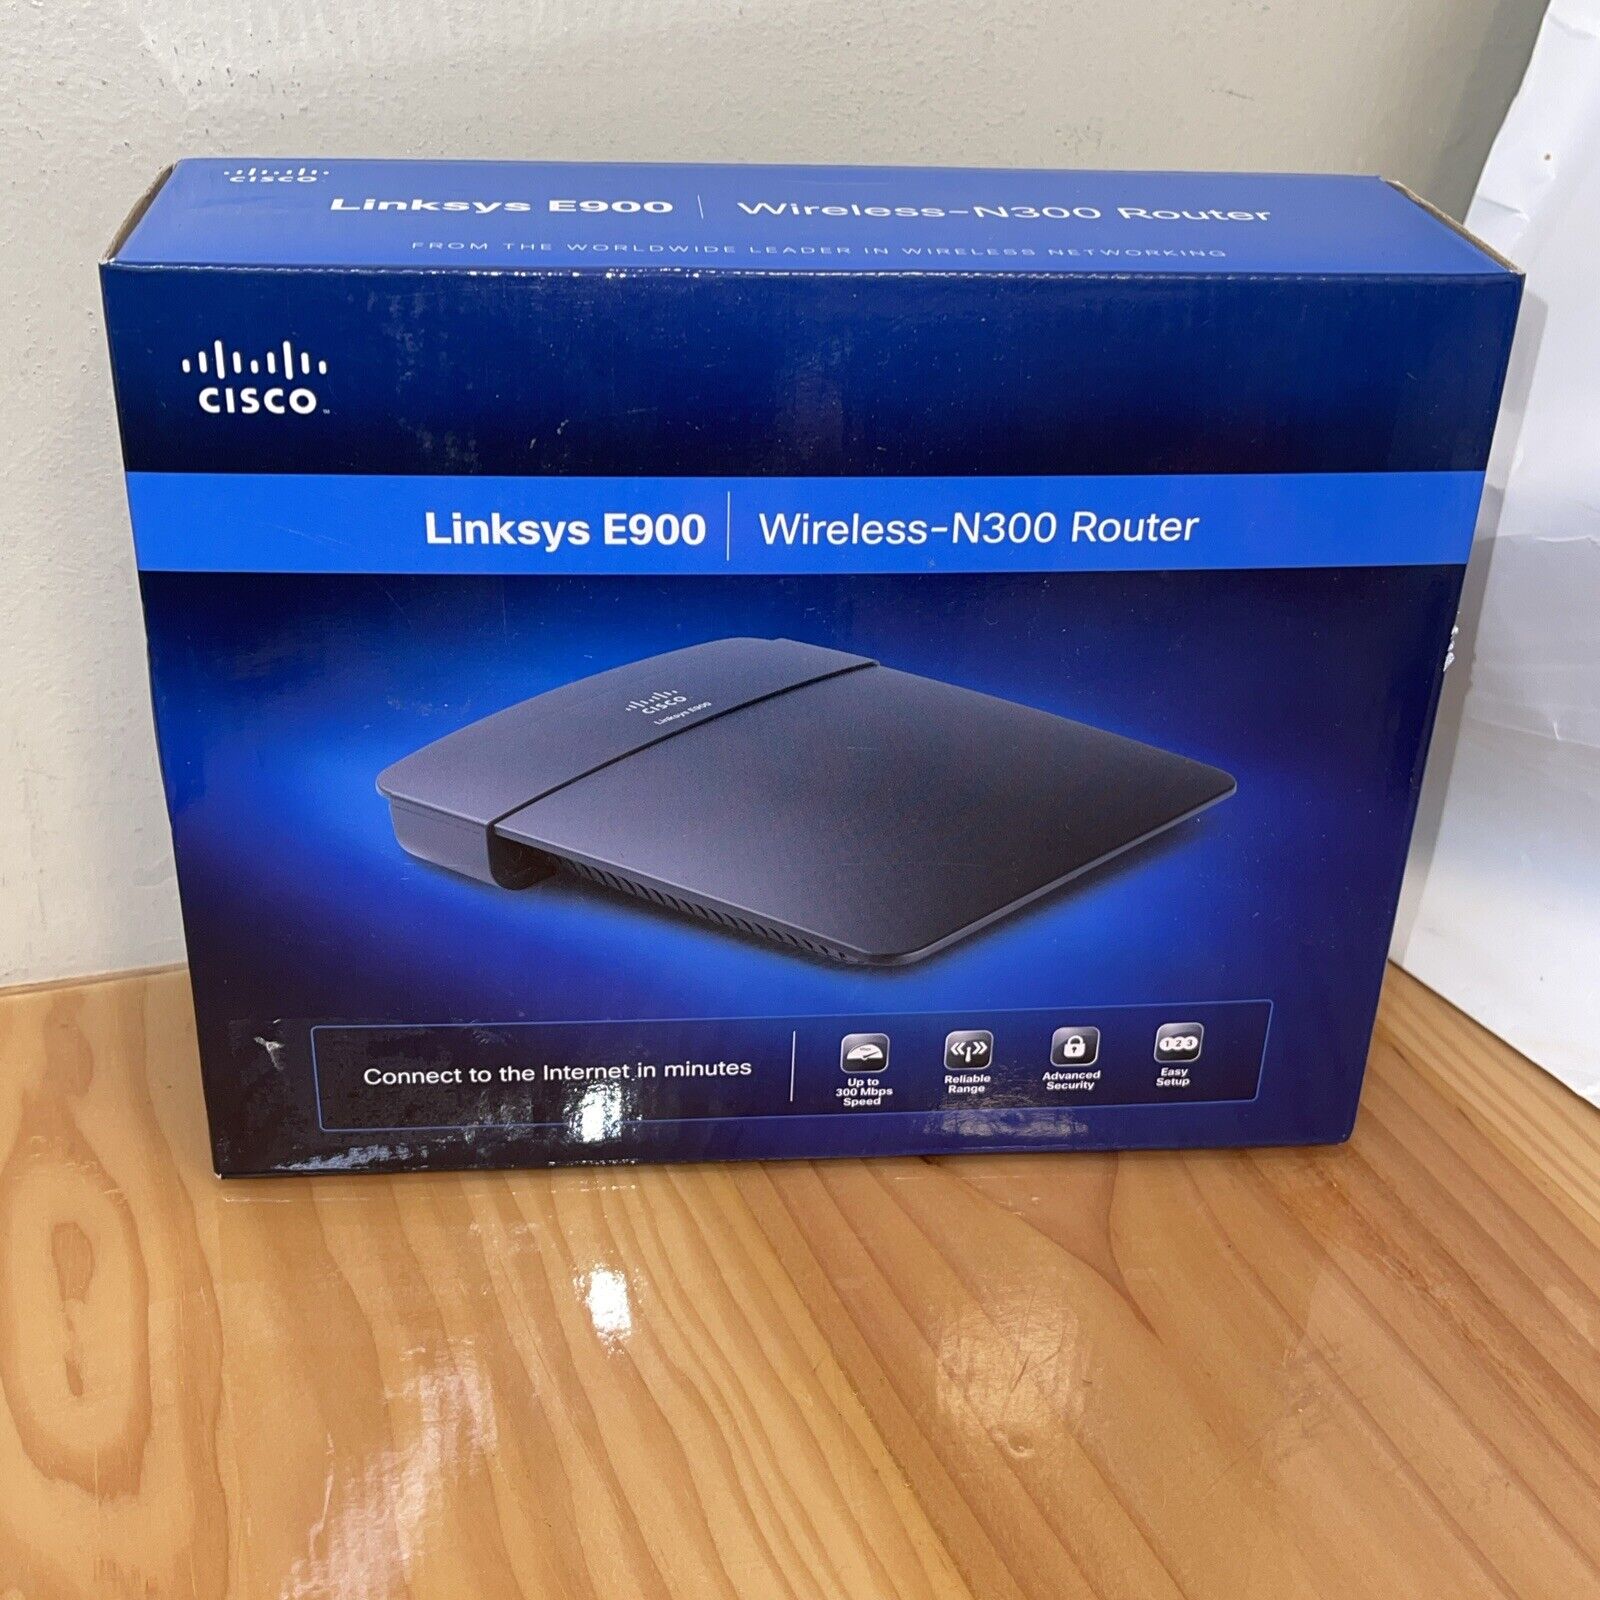 Linksys E900 Wireless N300 Router - Open Box - No Plug